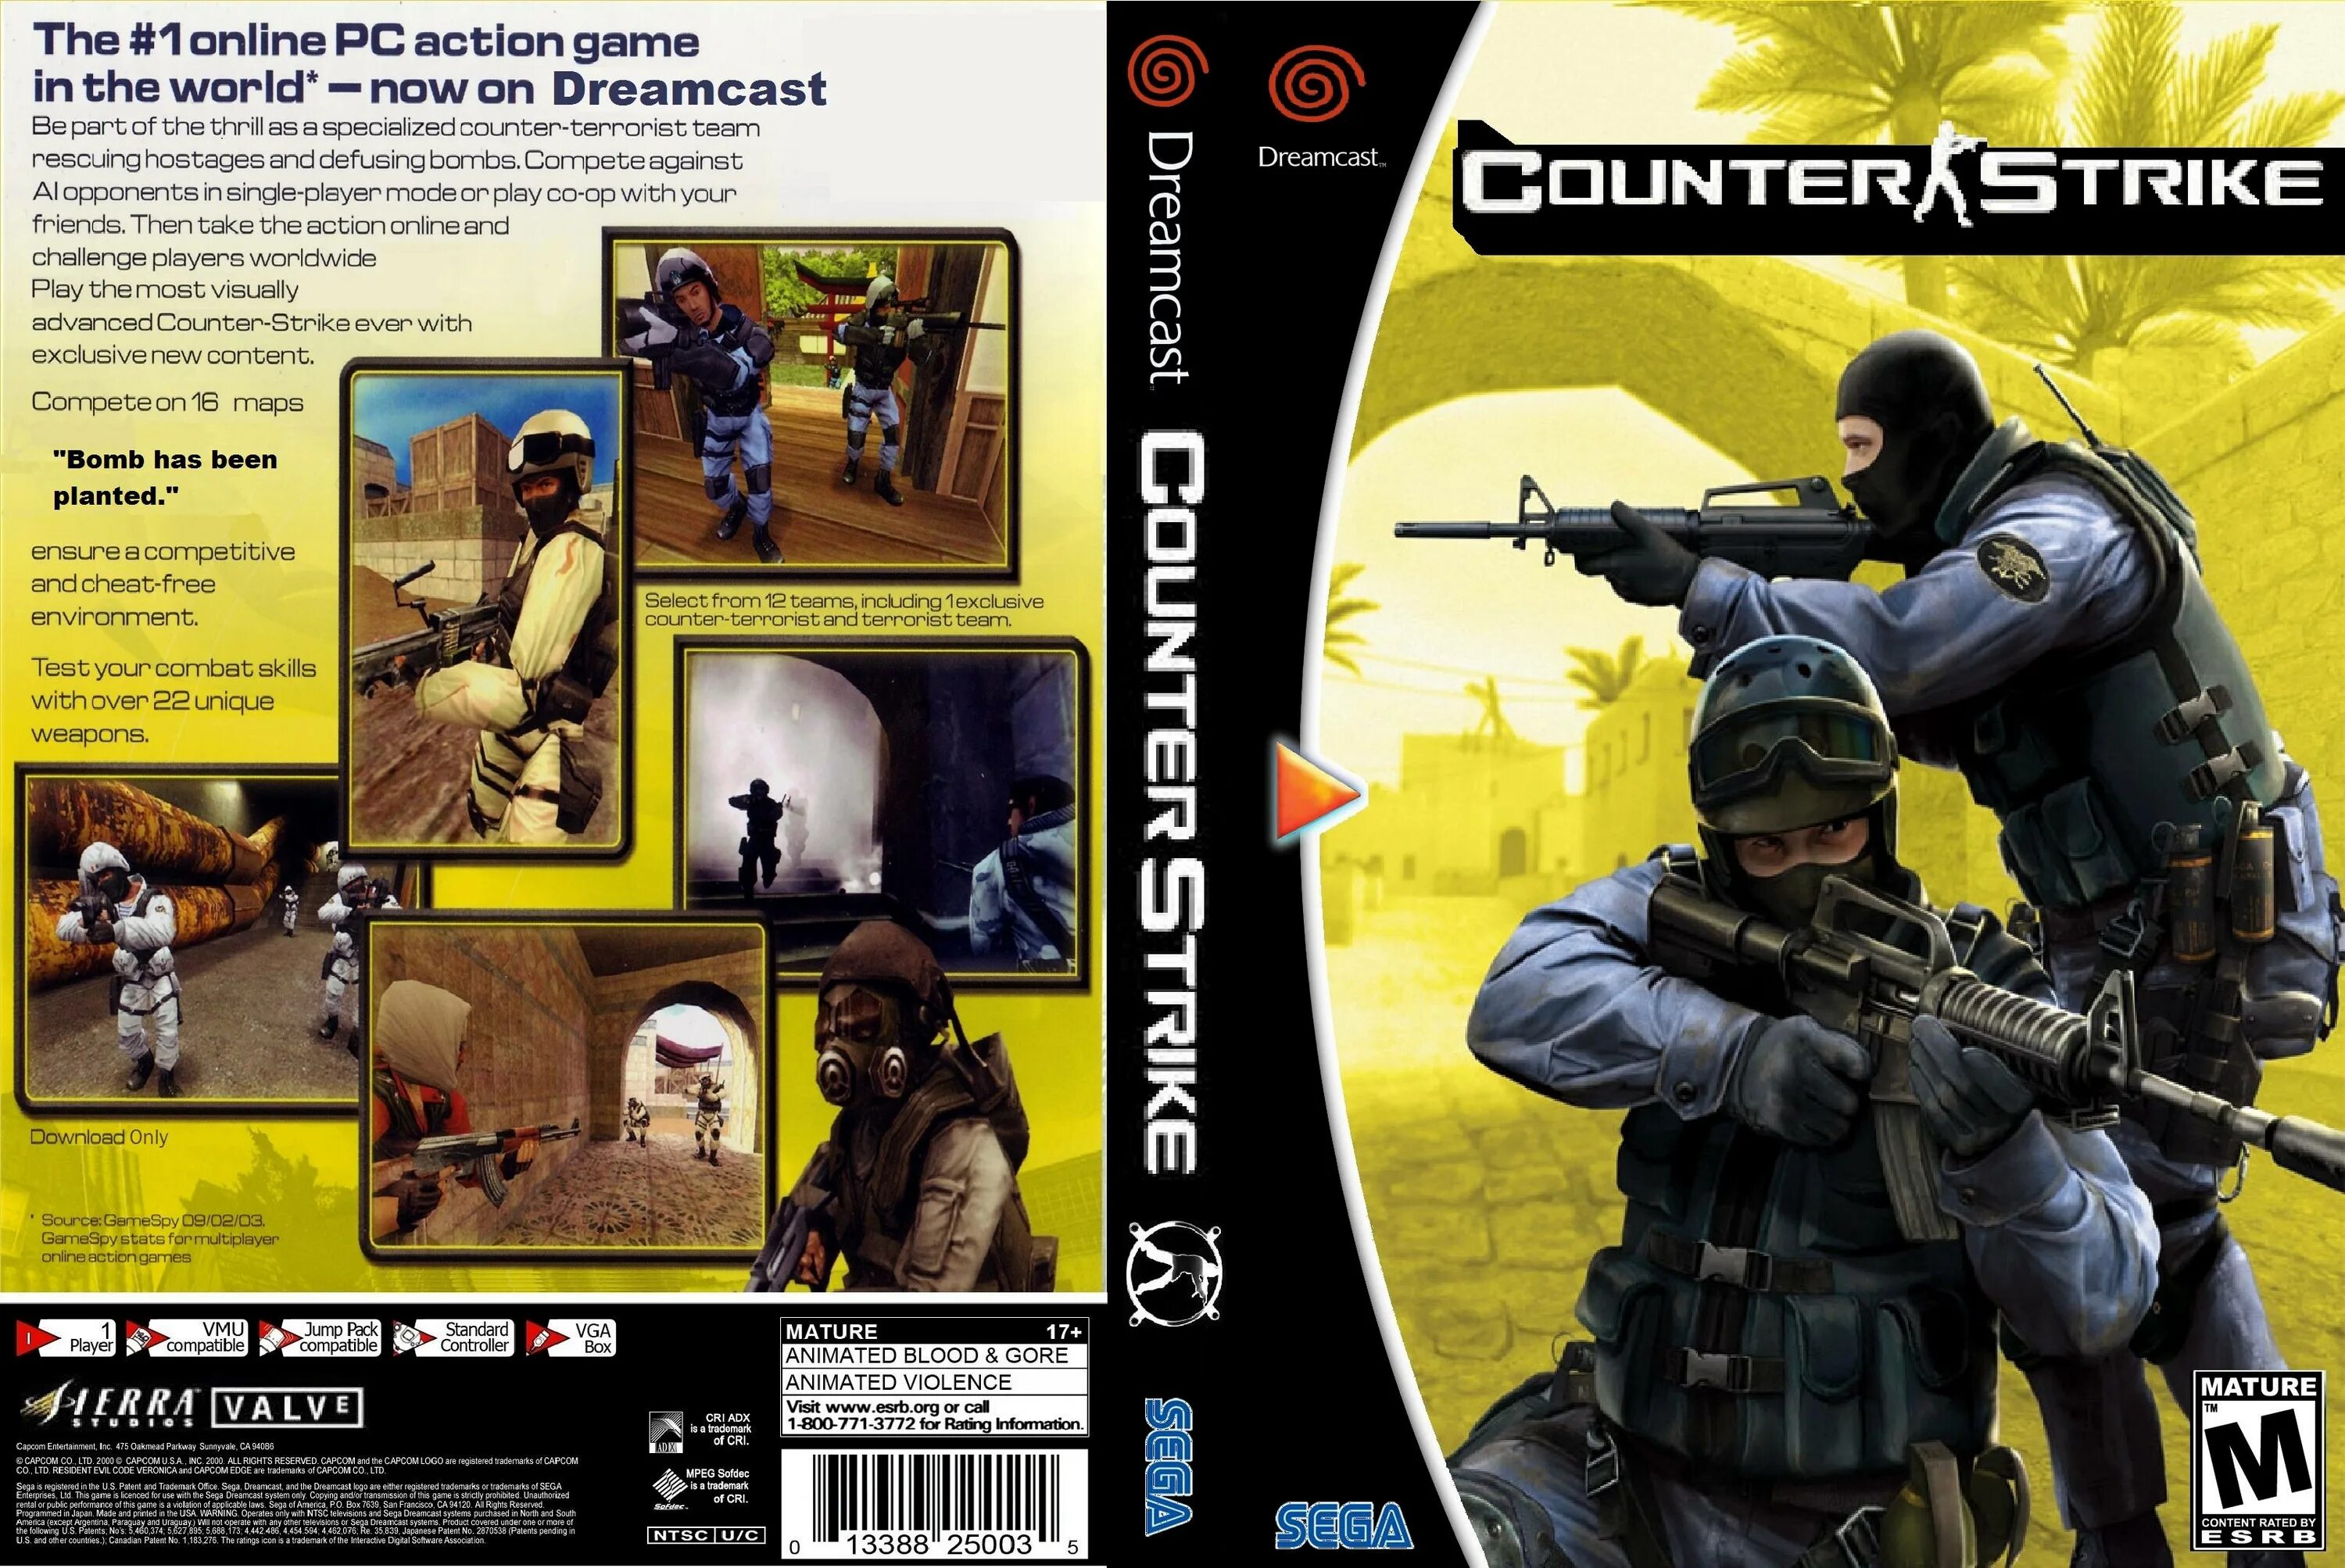 Страйк аудиокниги. Диск антология Counter Strike. Counter Strike 1.5 диск. Counter Strike 1.6 диск. Диск антология Counter Strike 1.6.